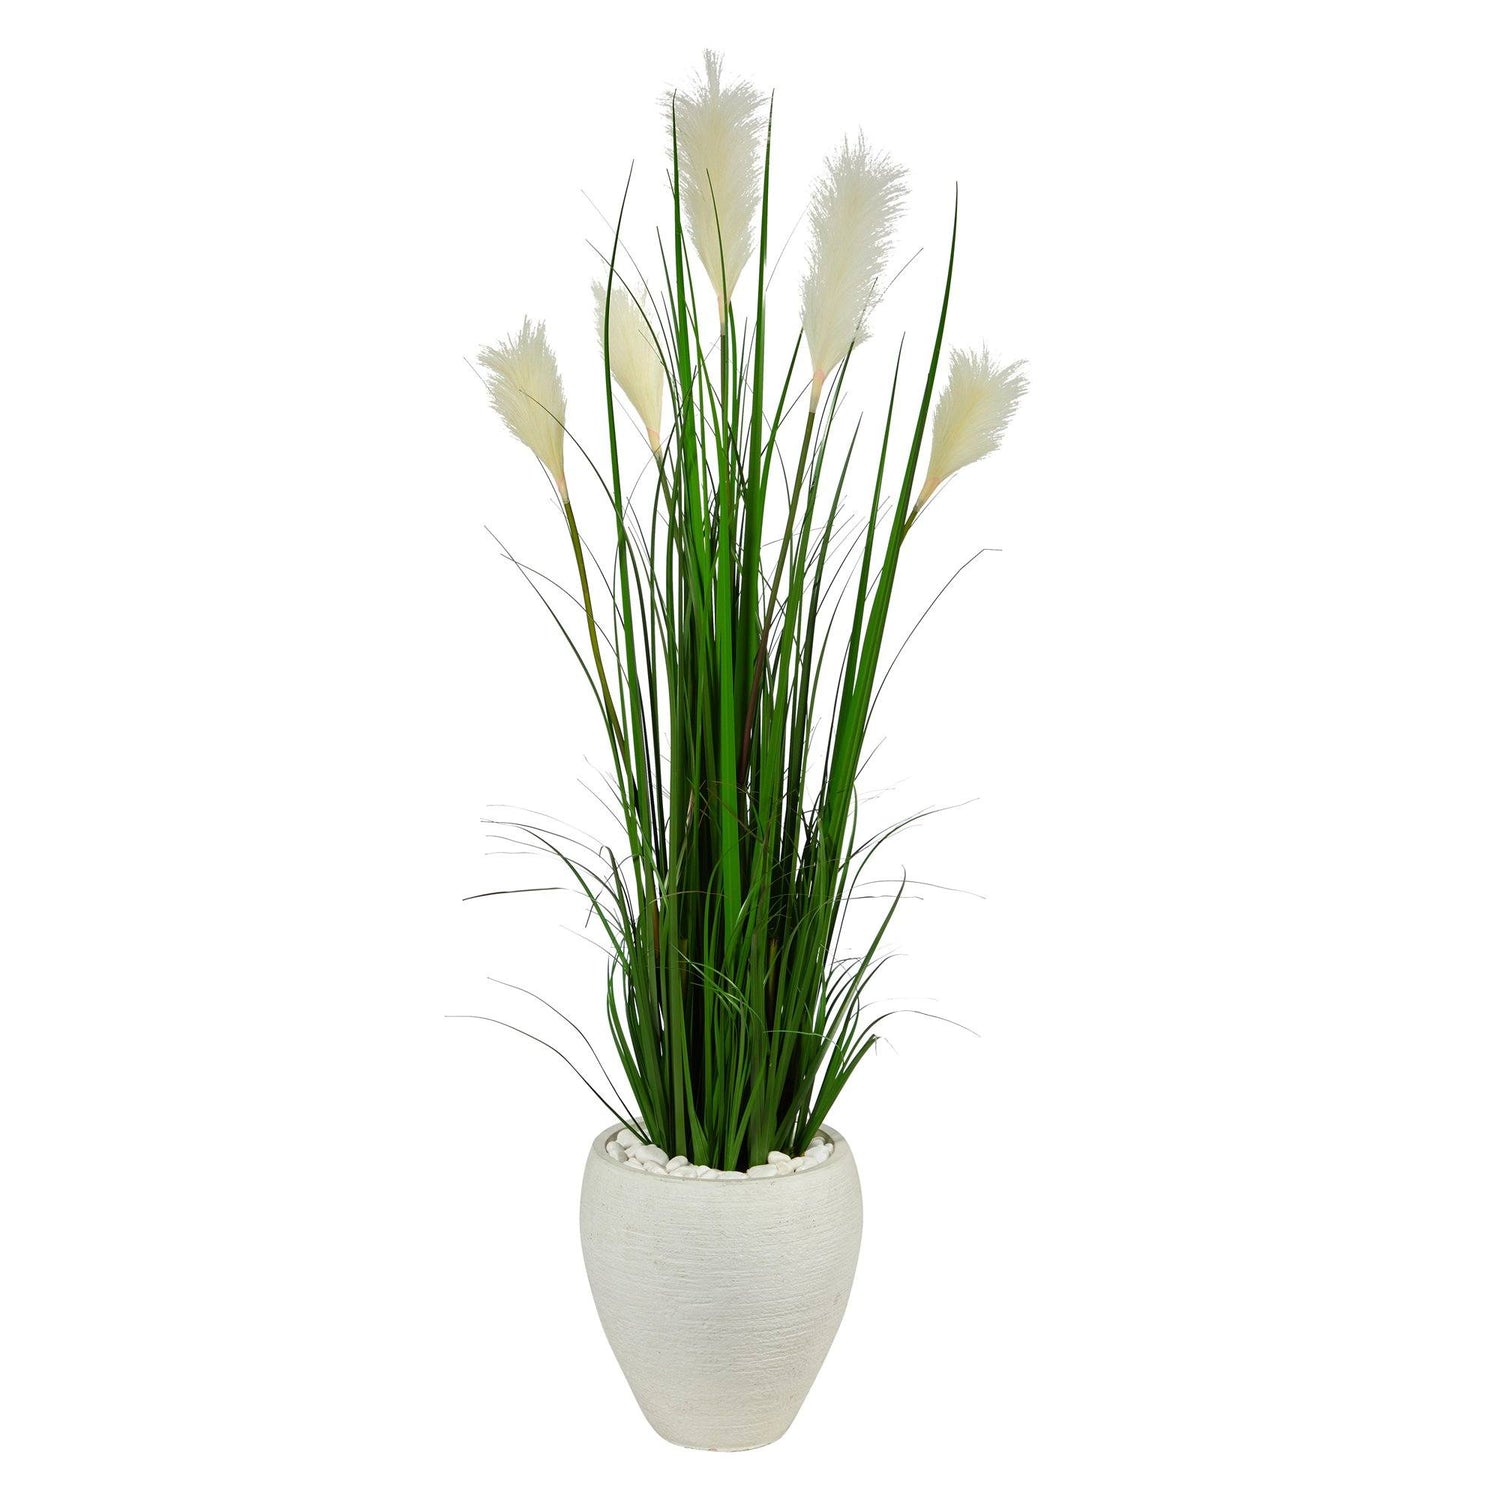 4.5’ Wheat Plum Grass Artificial Plant in White Planter